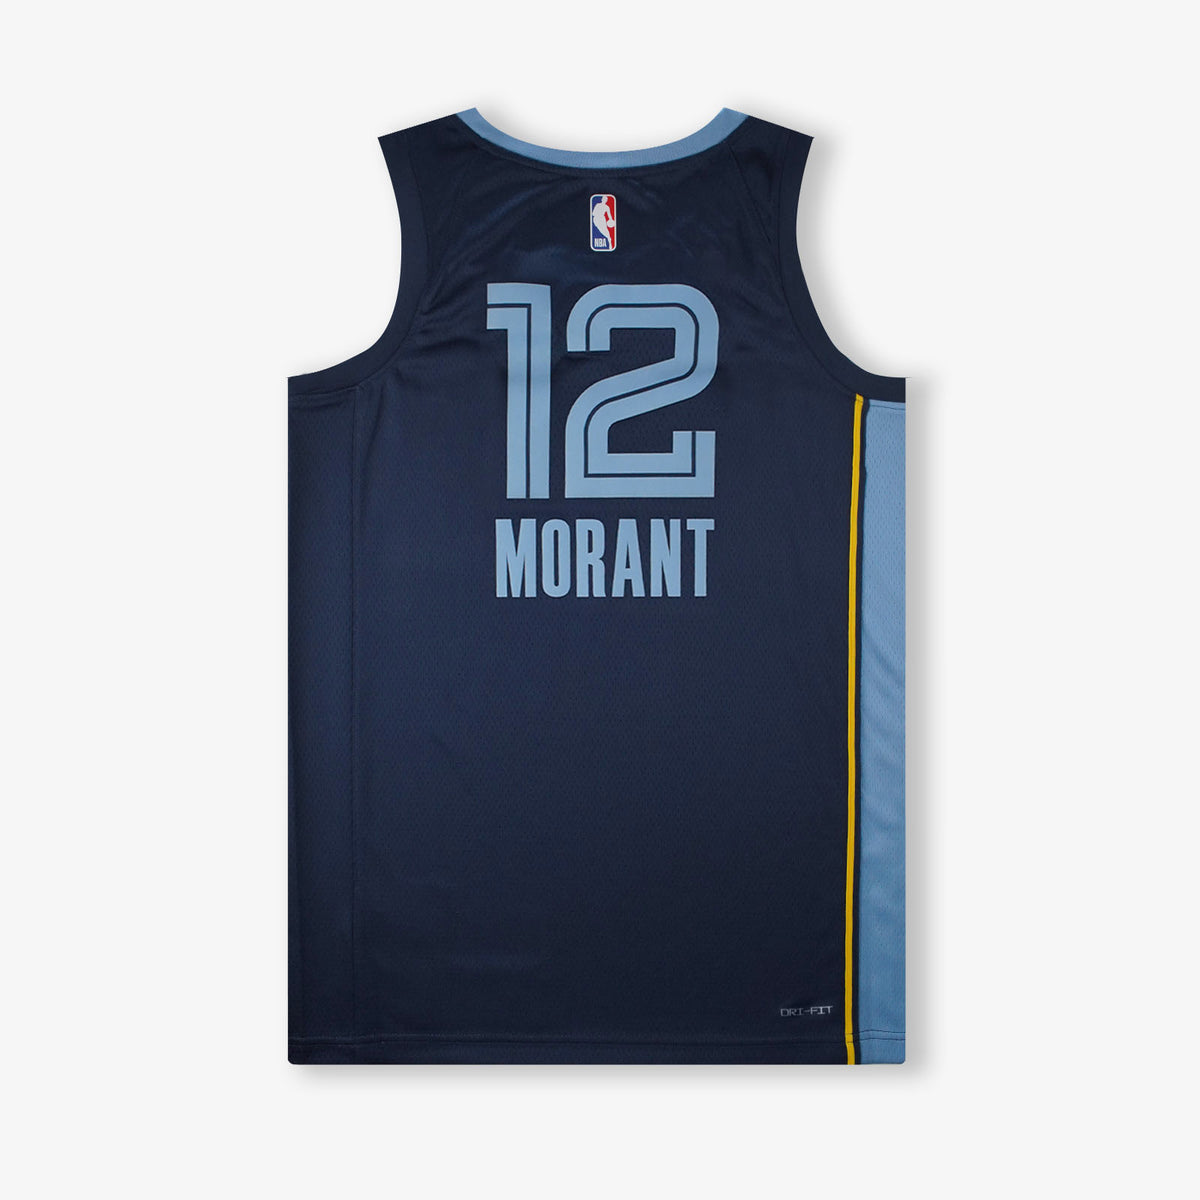 Youth Nike Ja Morant Navy Memphis Grizzlies Swingman Jersey - Icon Edition